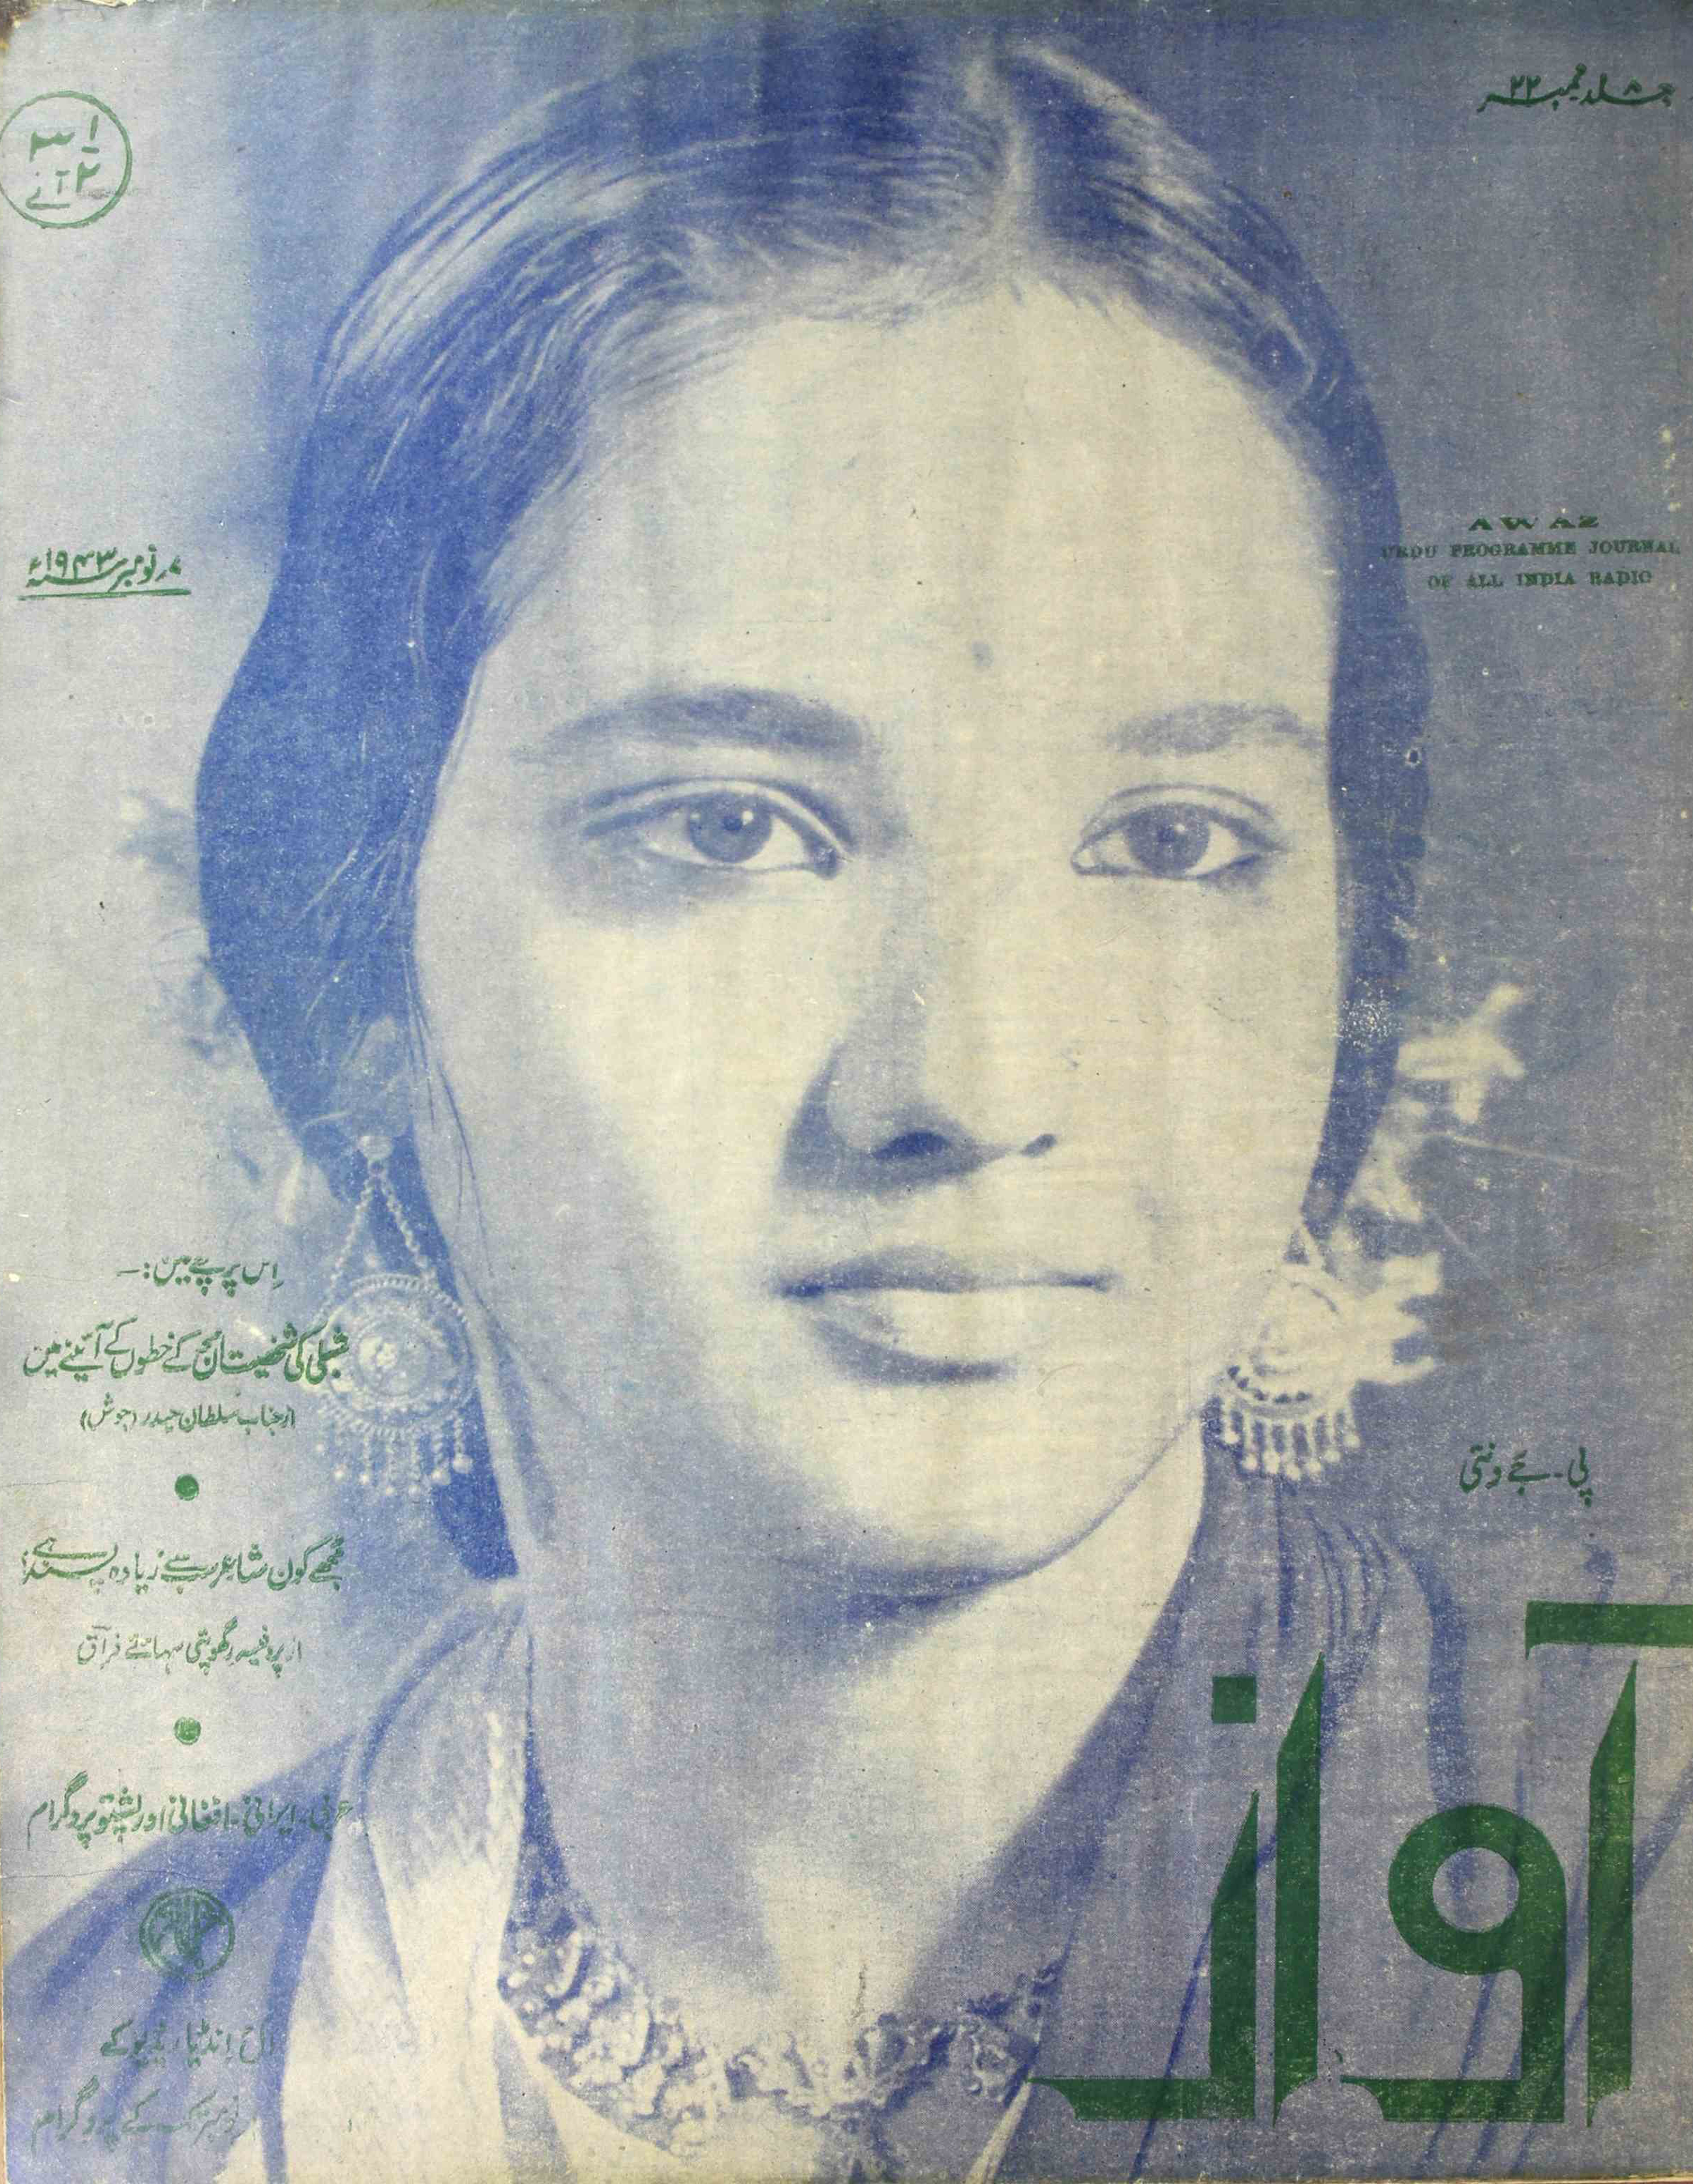 Awaz Jild 8 No 22 November 1943